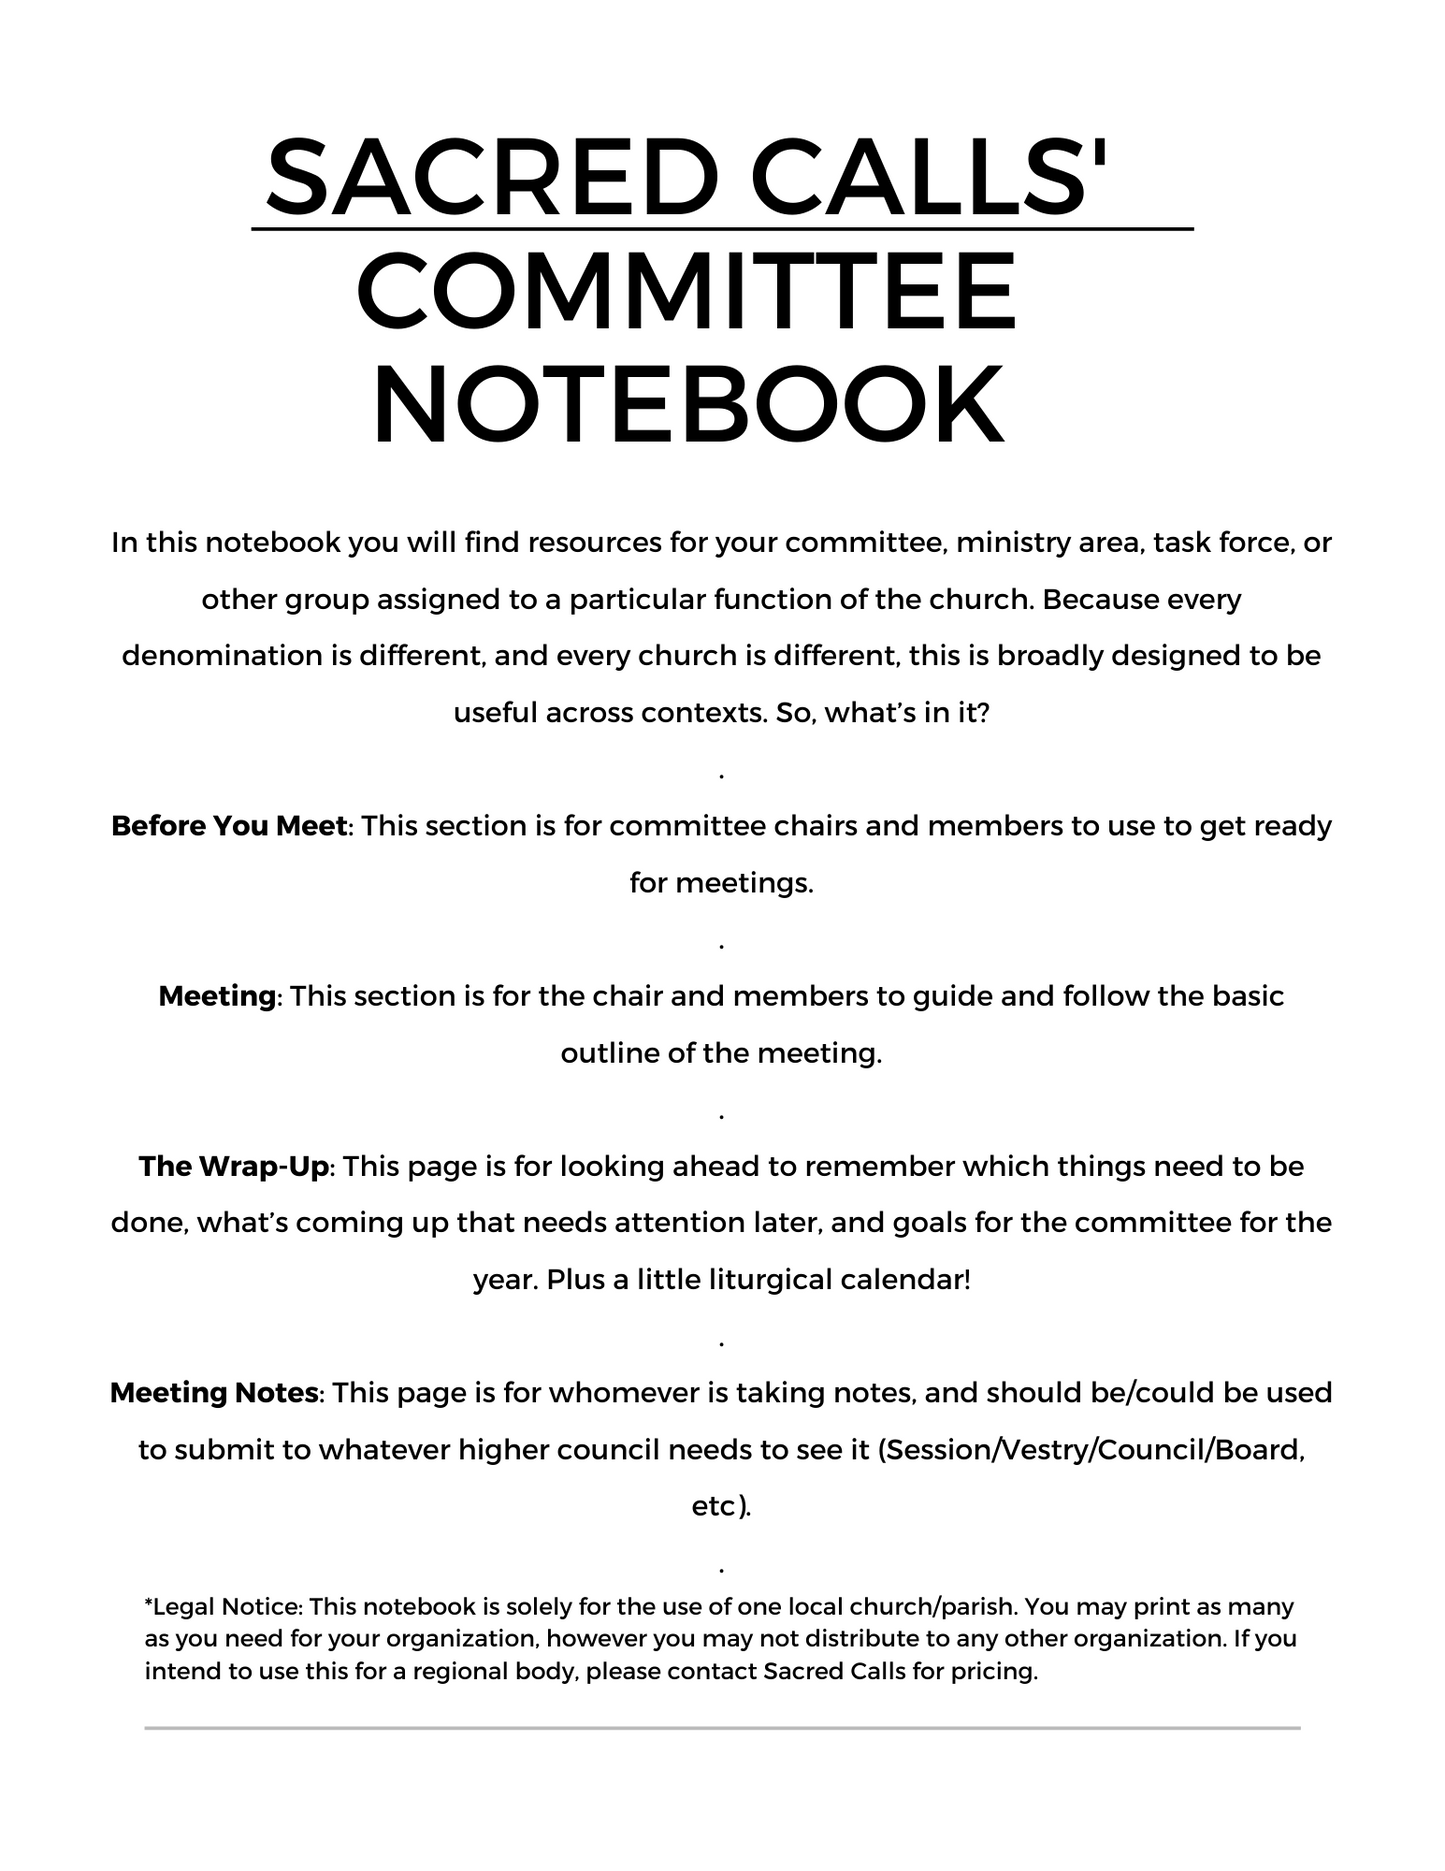 Committee/Task Force/Team Notebook